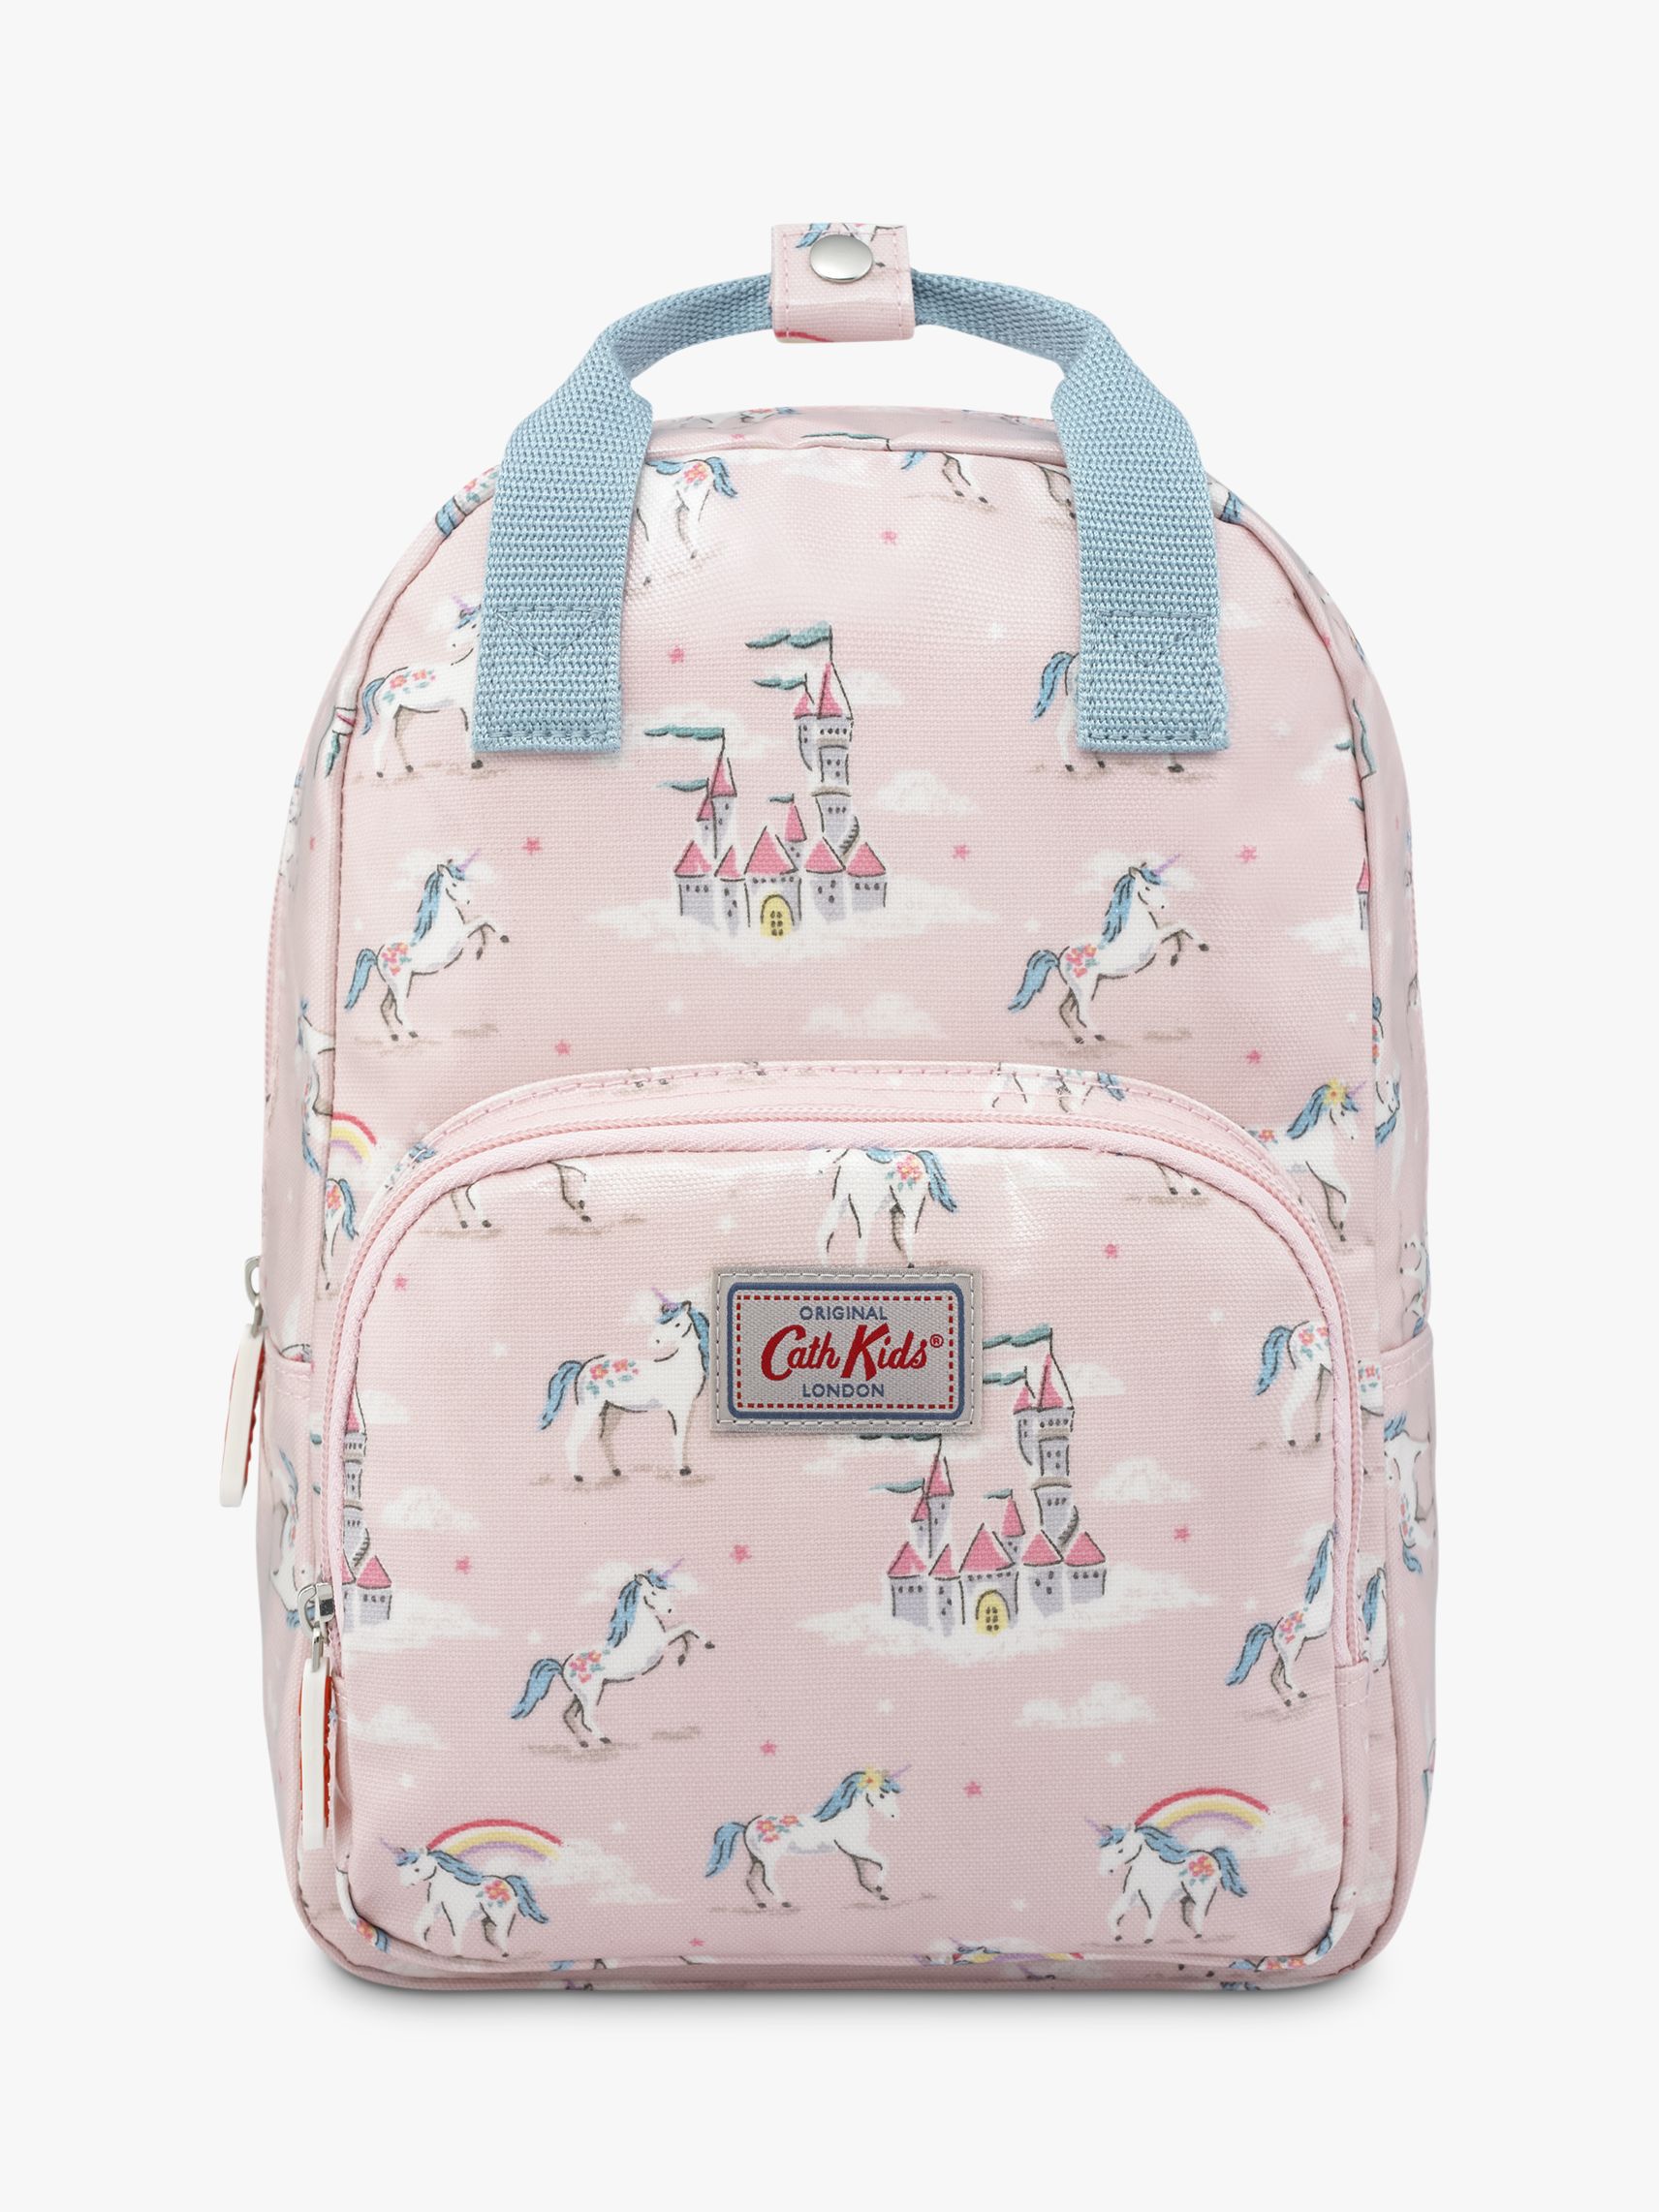 cath kidston childrens backpack